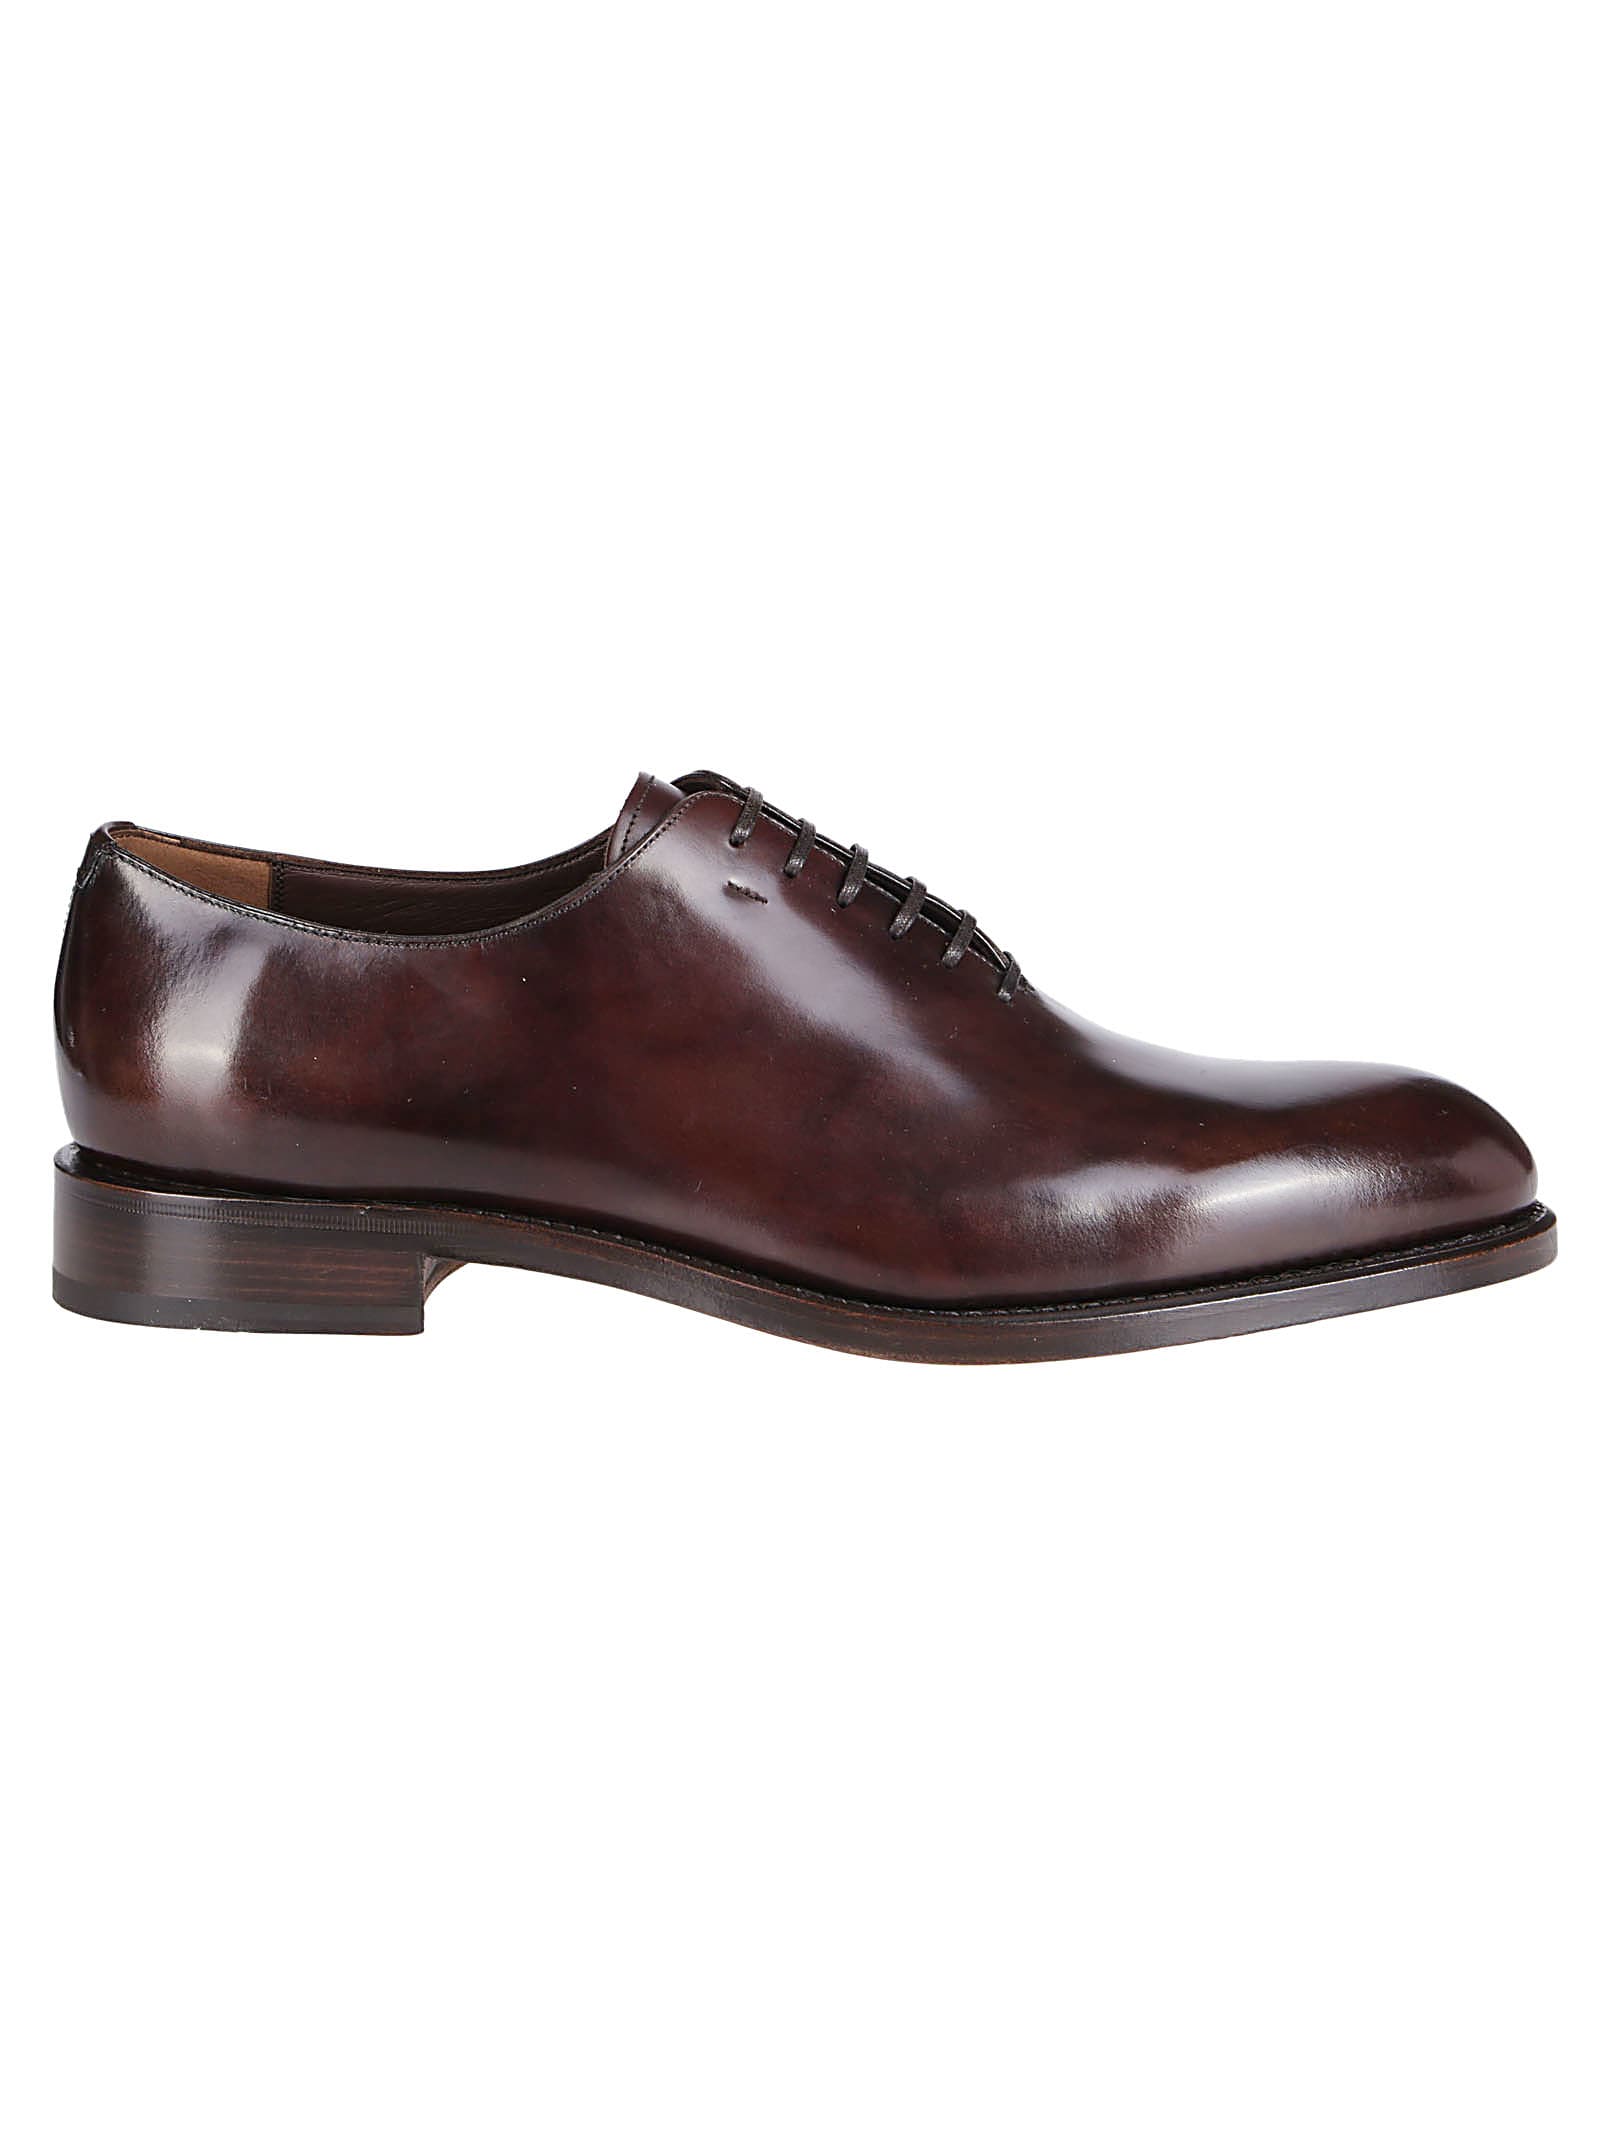 Ferragamo Brown Leather Angiolo Oxford Shoes